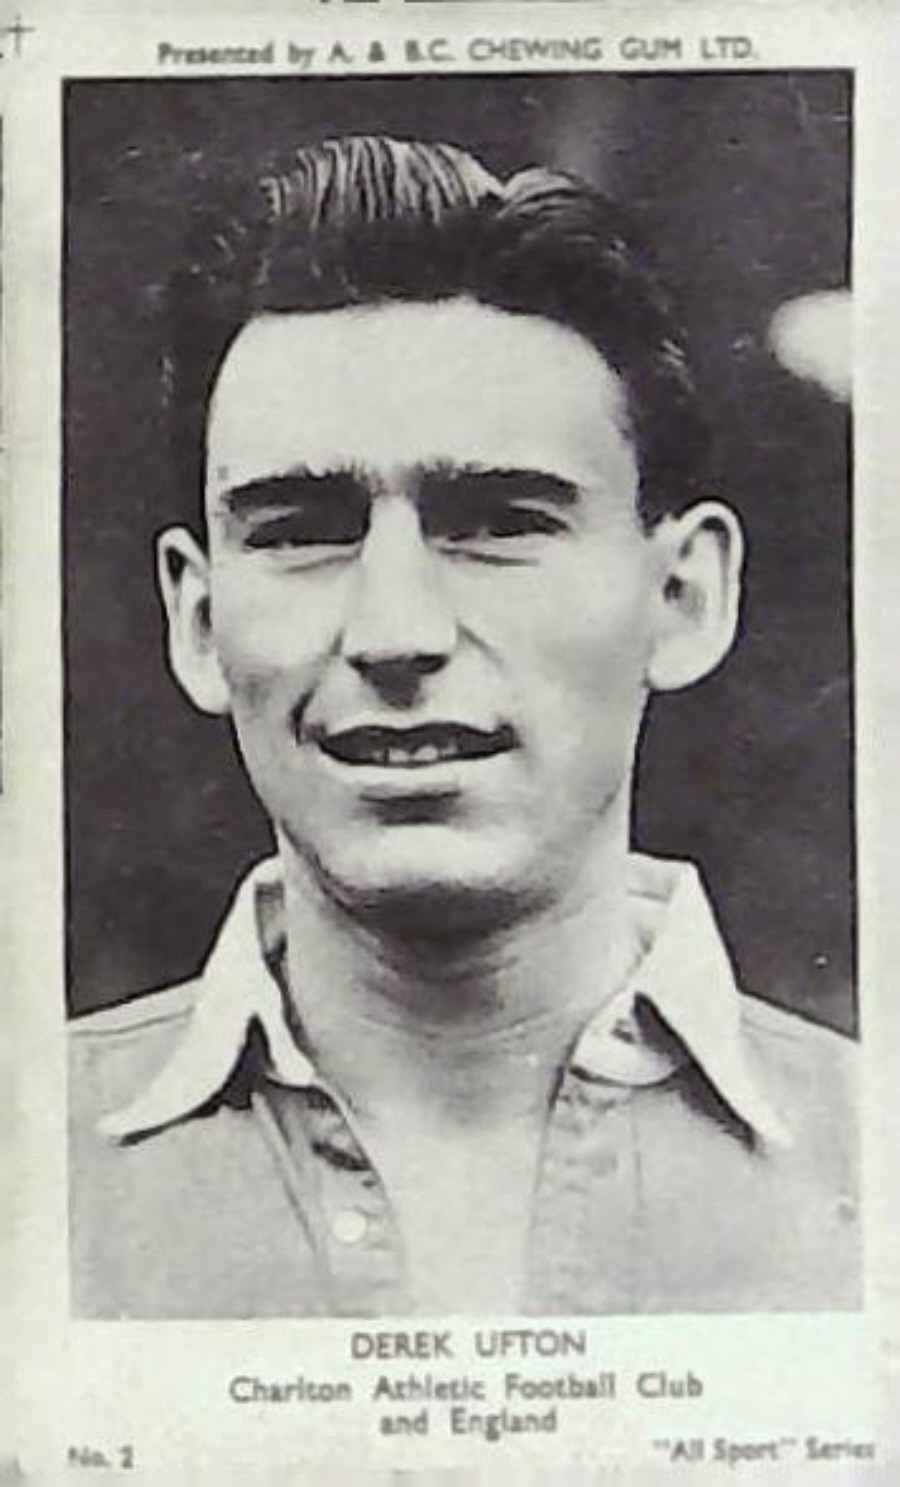 A & B C 1954 All Sports Football Derek Upton Charlton No 2